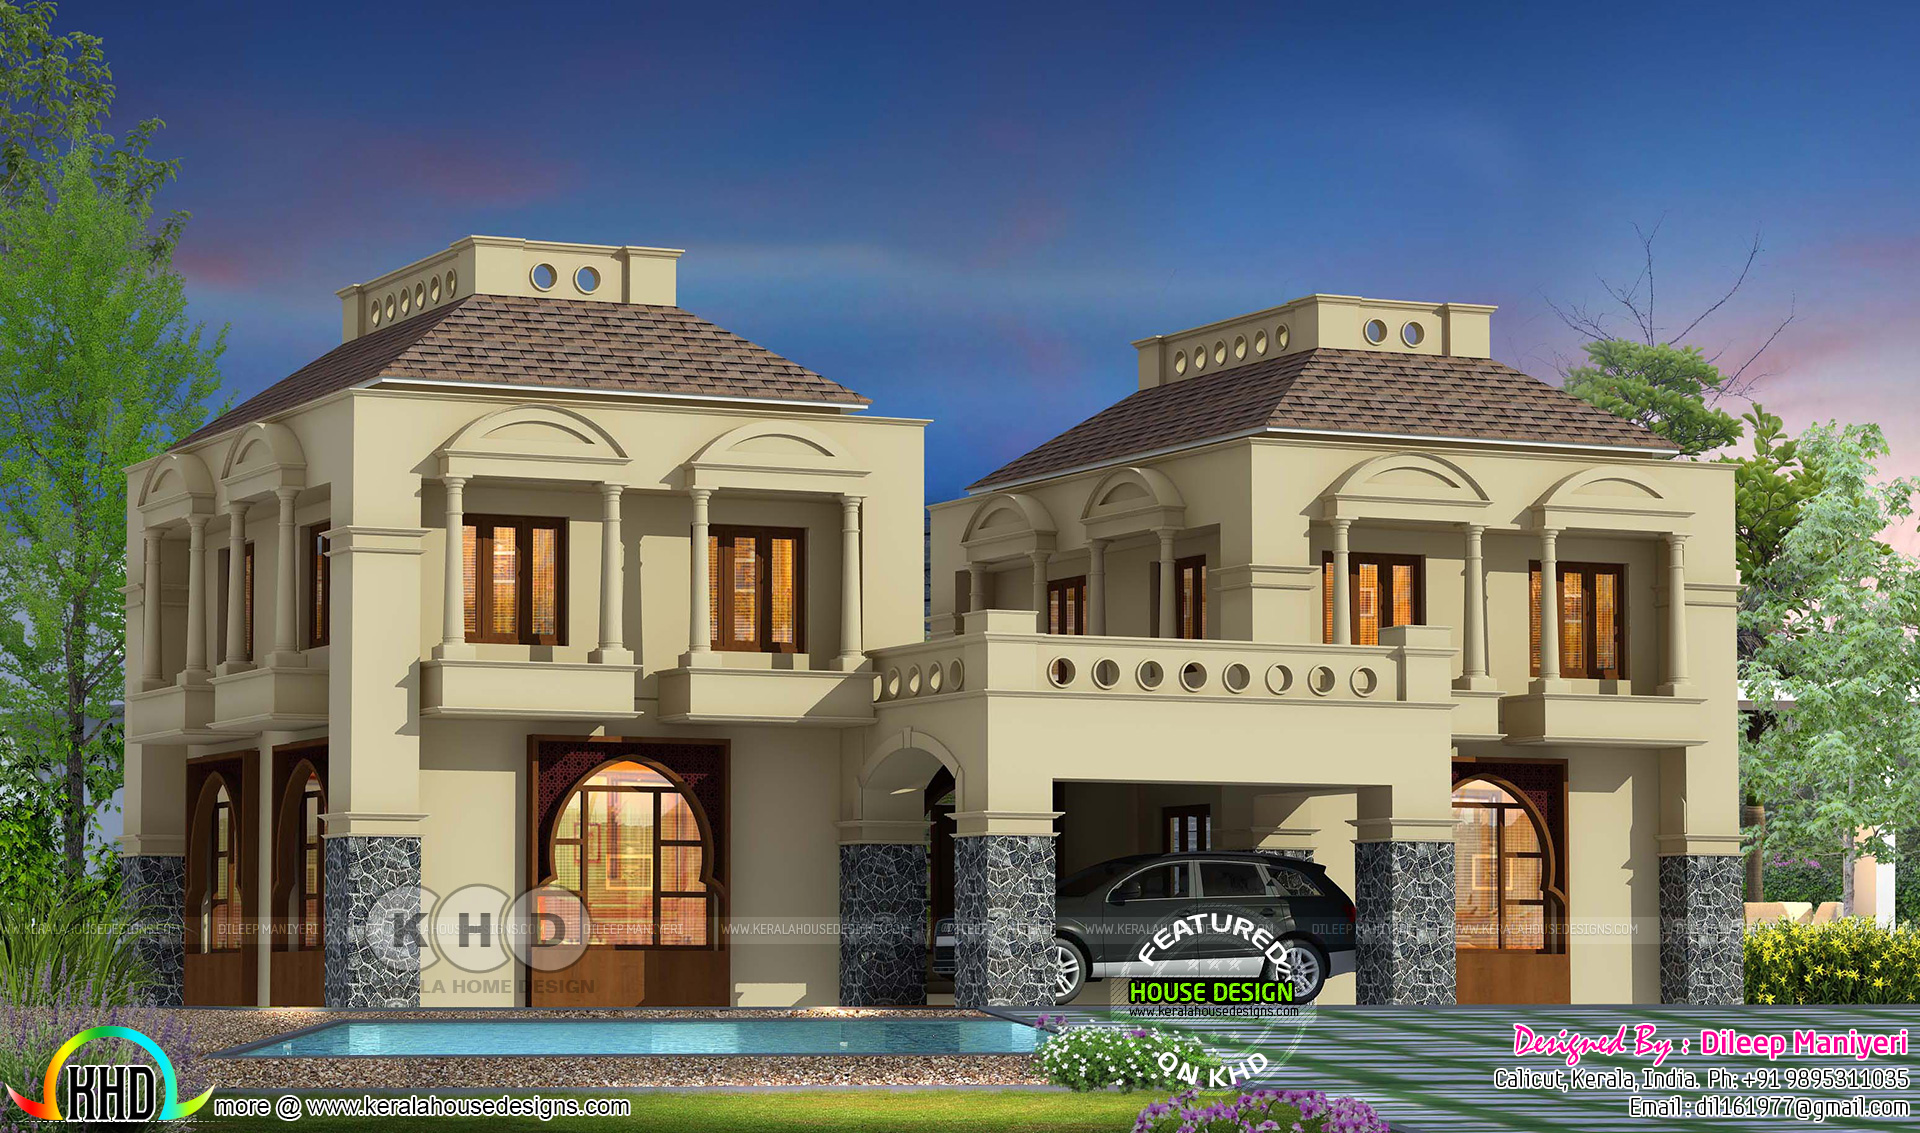 2780 Sq Ft 4 Bedroom Arabian Model House Plan Kerala Home Design